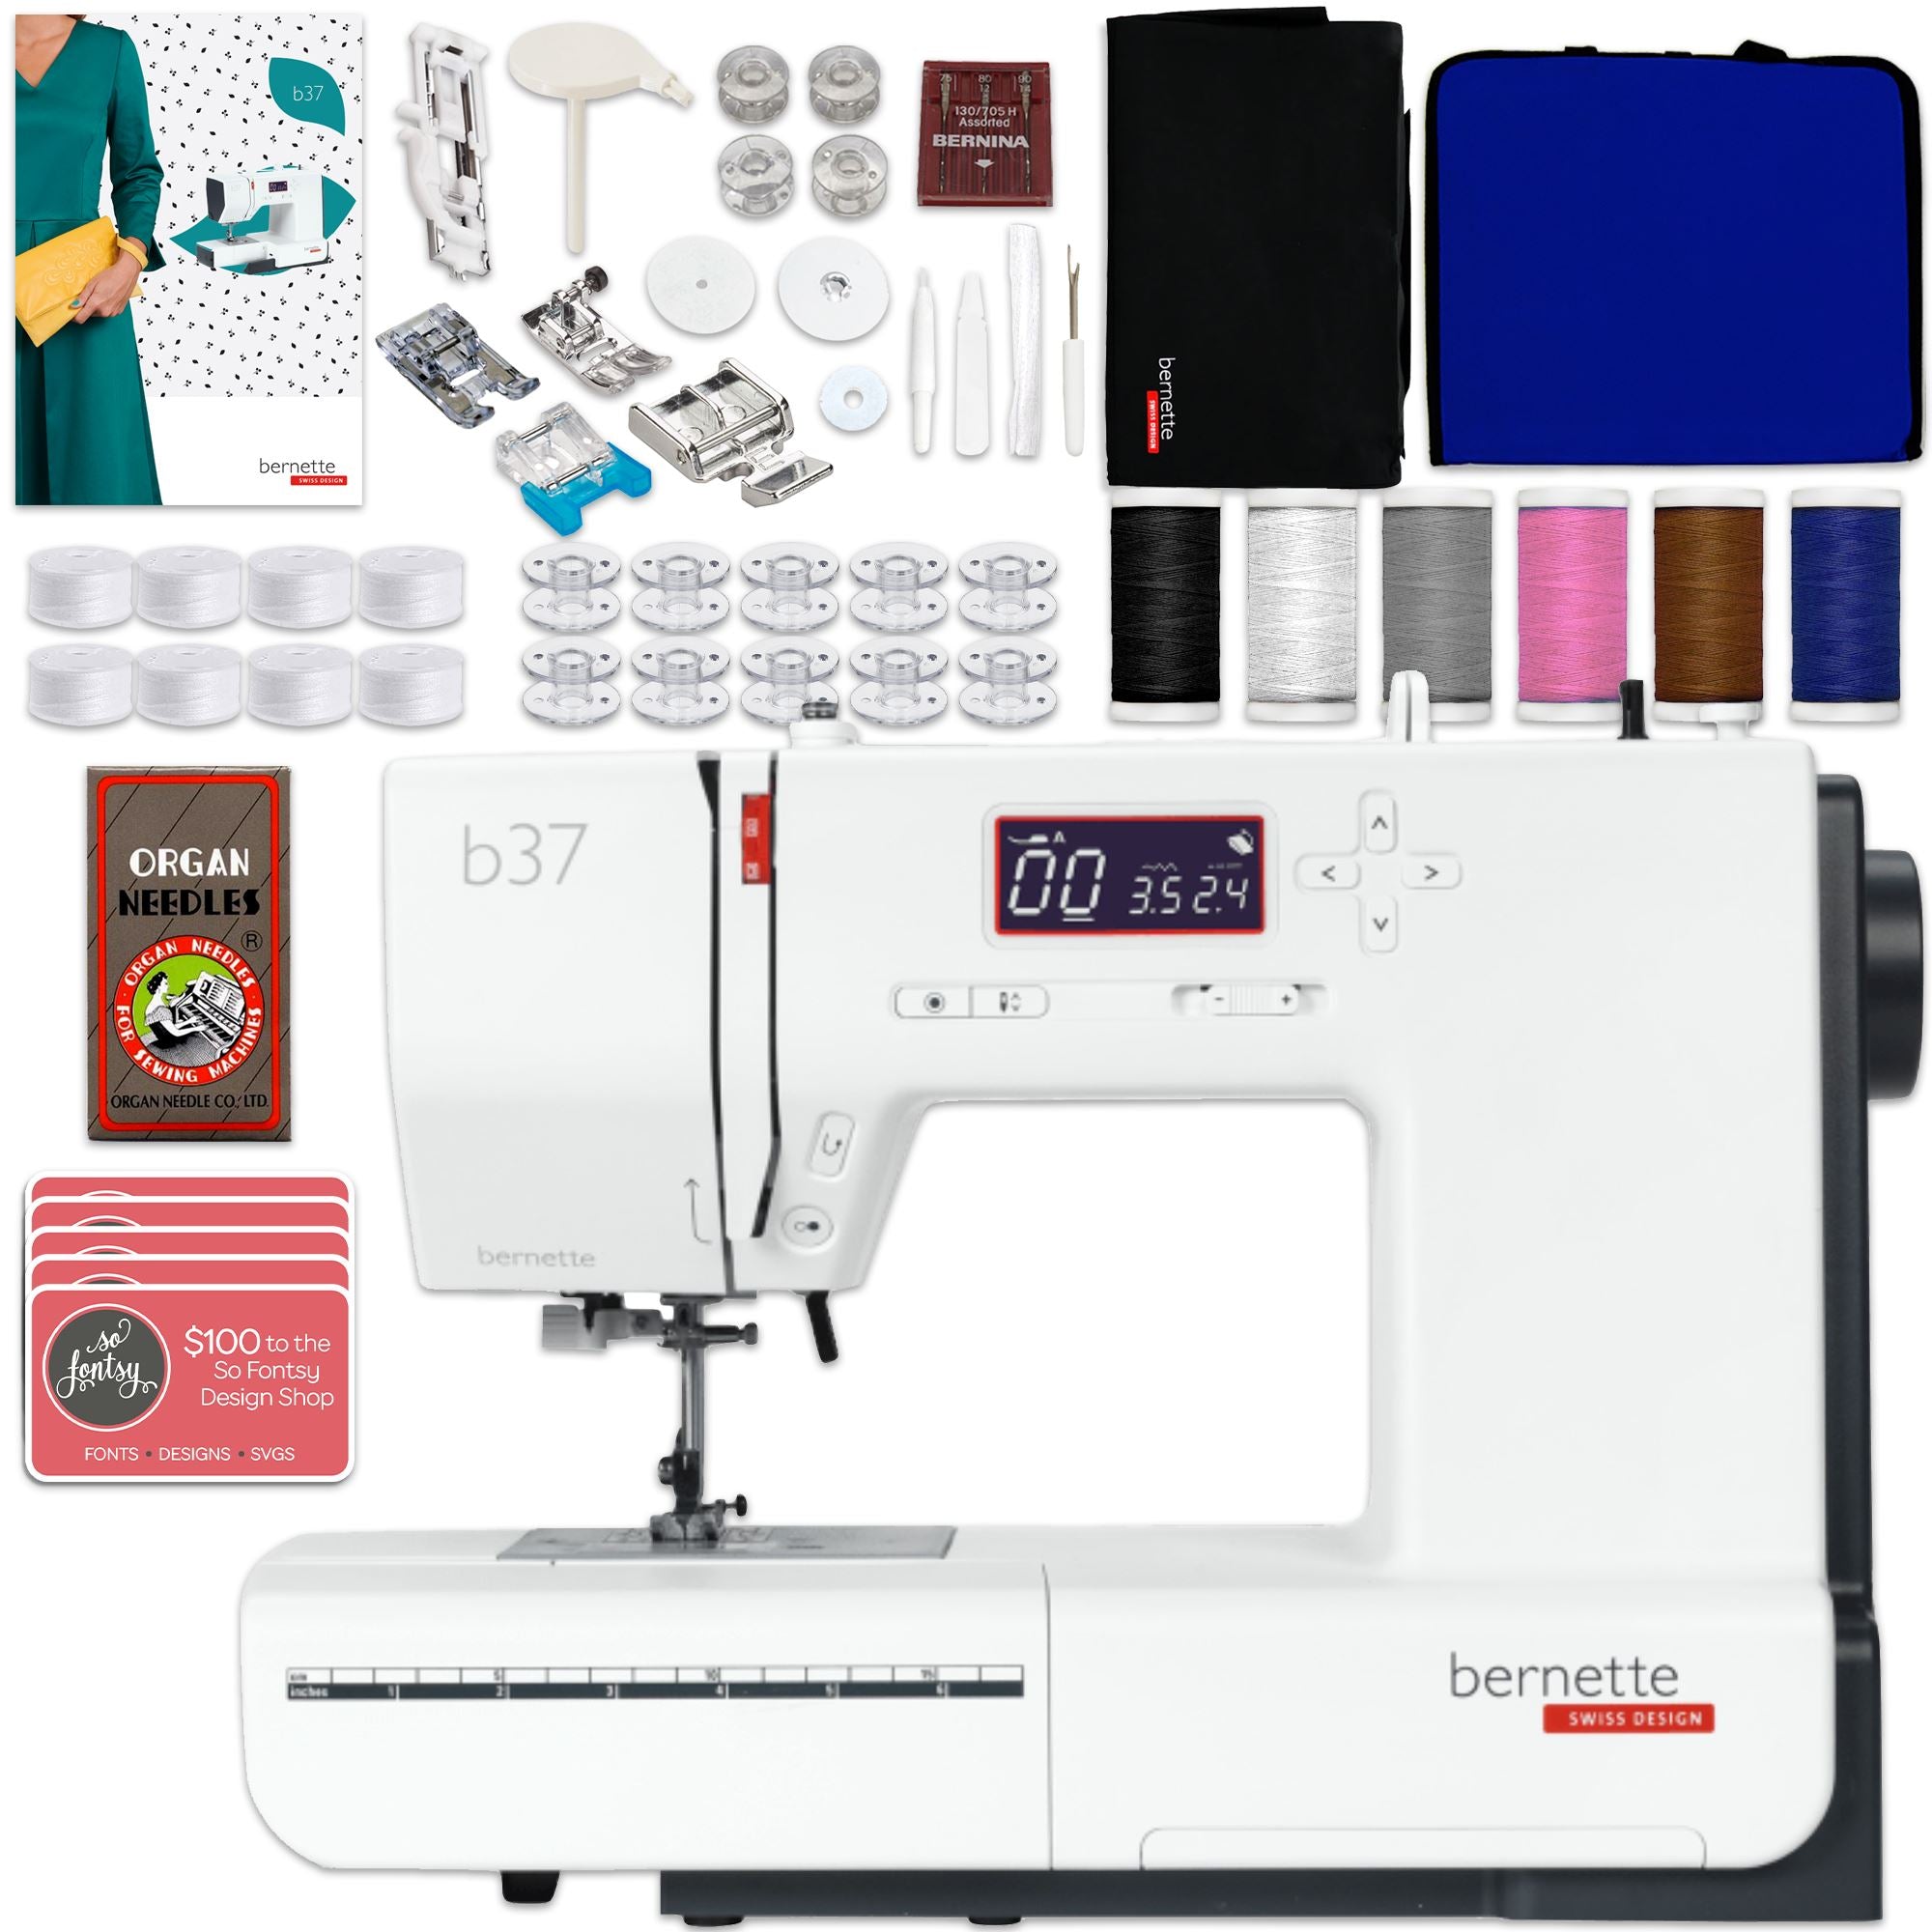 Bernette B37 Sewing Machine Bundles on Sale